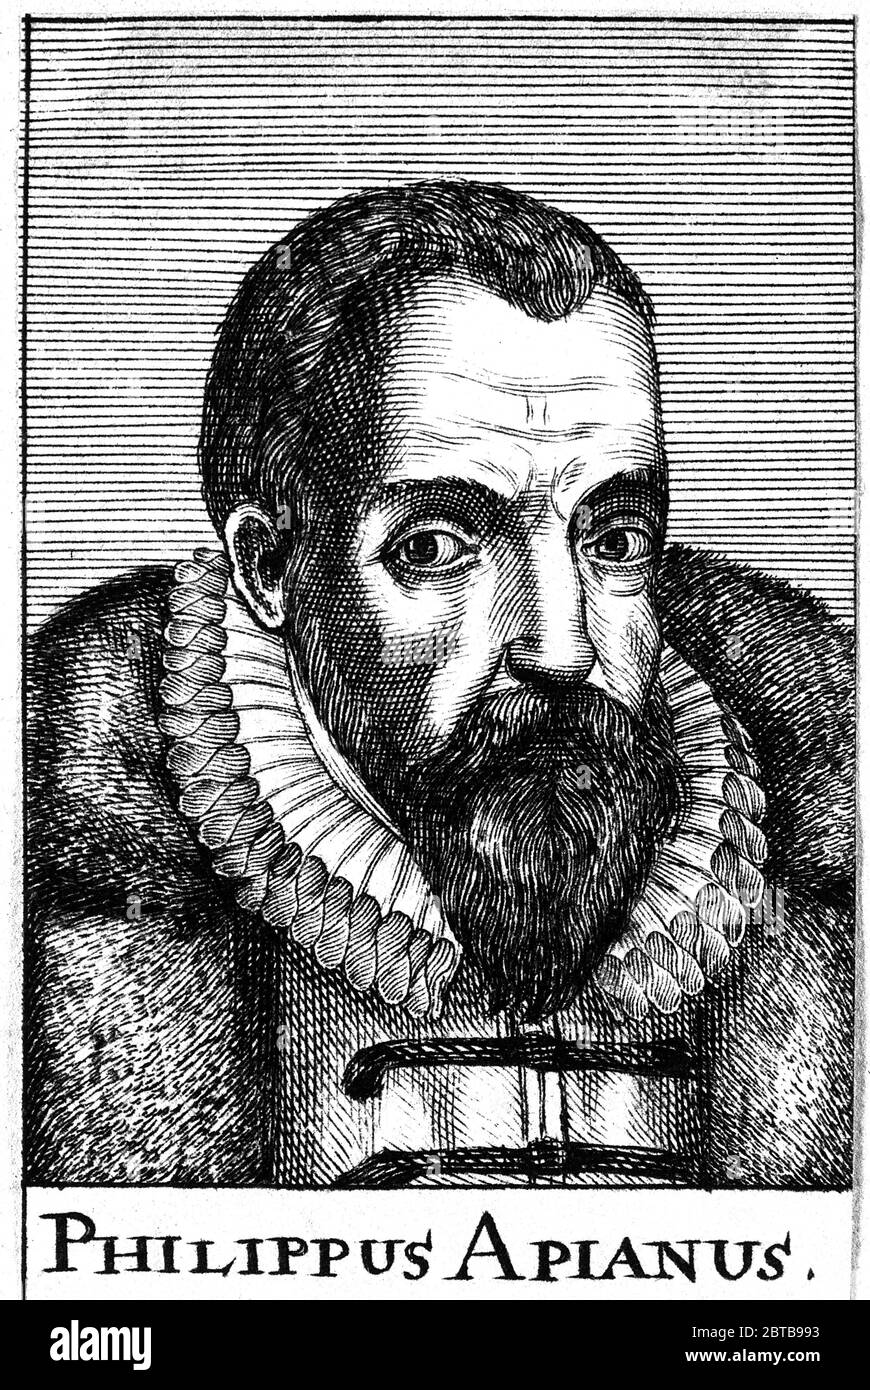 1580 ca. , DEUTSCHLAND : der deutsche Mathematiker, Kartograph und Phisiker PHILIPP APIAN aka Philippus APIANUS aka FILIPPO APIANO ( 1531 - 1589 ), Sohn des berühmten Astronomen PETER APIAN aka PETRUS APIANUS aka PIETRO APIANO ( 1495 - 1552 ). Porträt von 1668 .- Peter Bennewitz oder Peter Bienewitz - ritratto - Portrait - SCIENZIATO - SCIENZA - WISSENSCHAFT - WISSENSCHAFTLER- GESCHICHTE - fotostoriche - MATEMATICA - MATEMATICA - MATHEMATICS - MATHEMATICS - MATHEMATICS - Medico - Medic - Medicina - Medicine - illustrazione - Illustration - Gravur - incisione - cartografo - cartografia - b Stockfoto